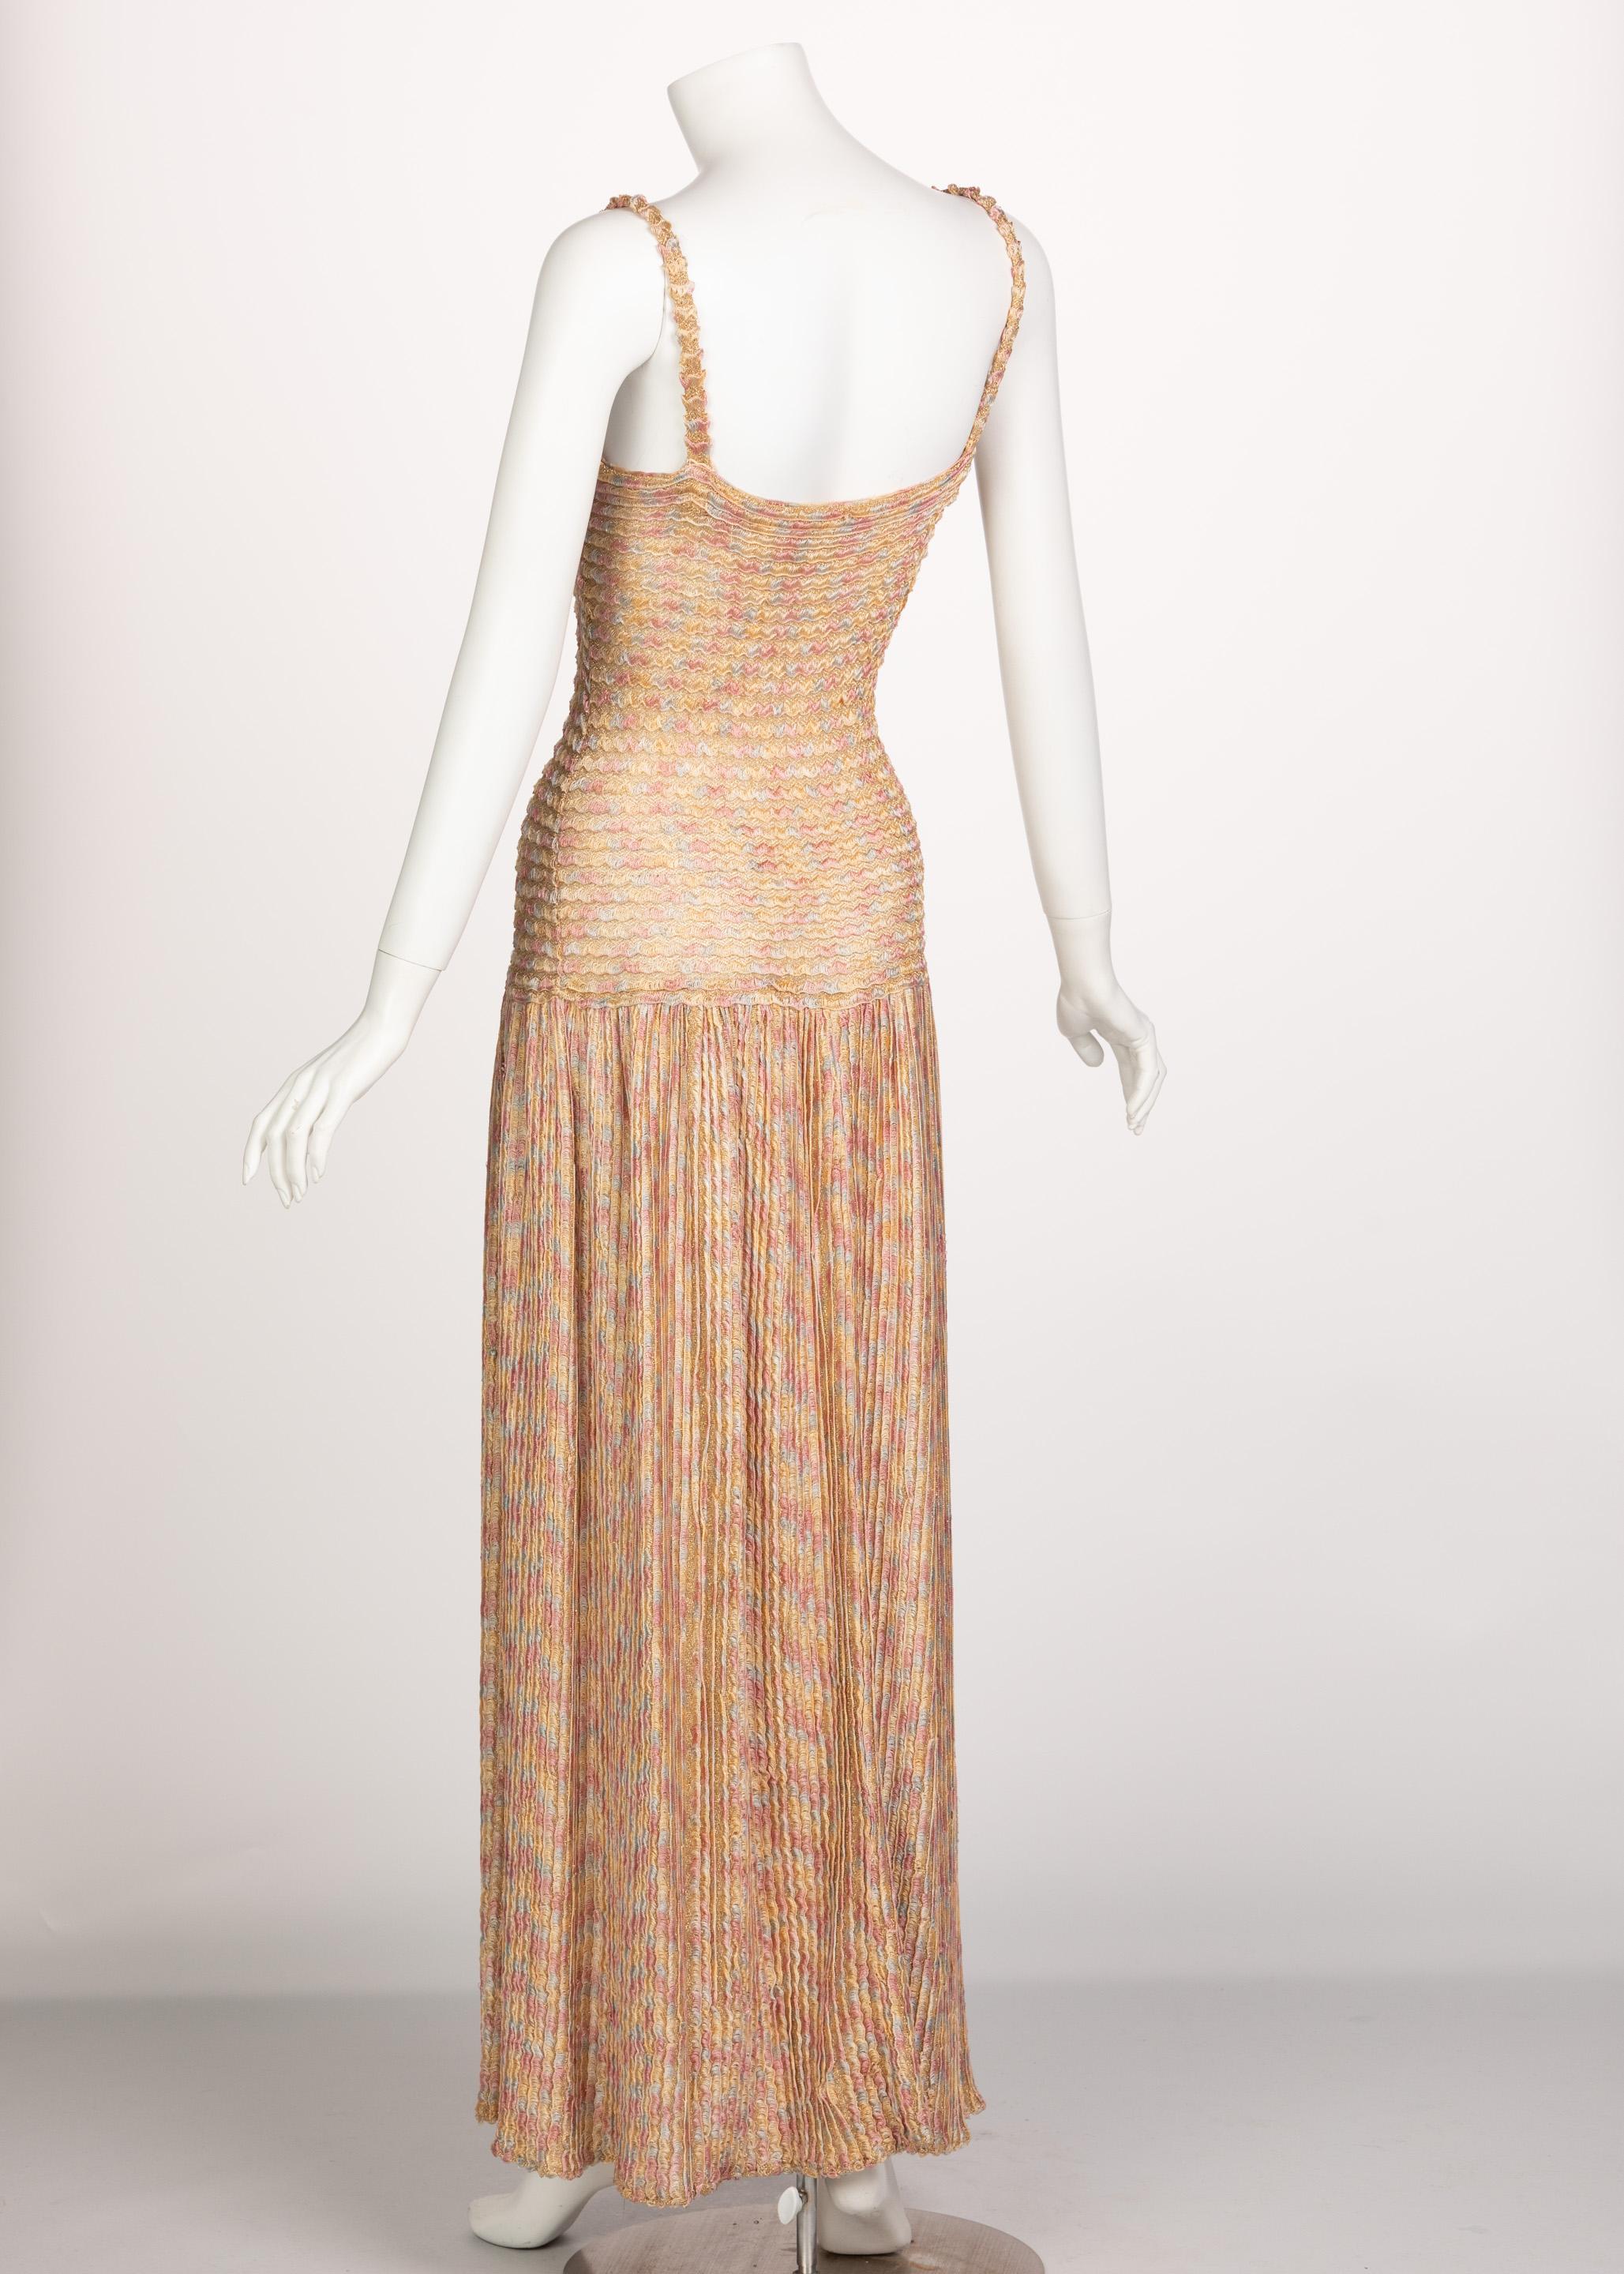 Missoni Pink Gold Knit Maxi Dress Cardigan Necklace Beret Set, 1970s For Sale 4